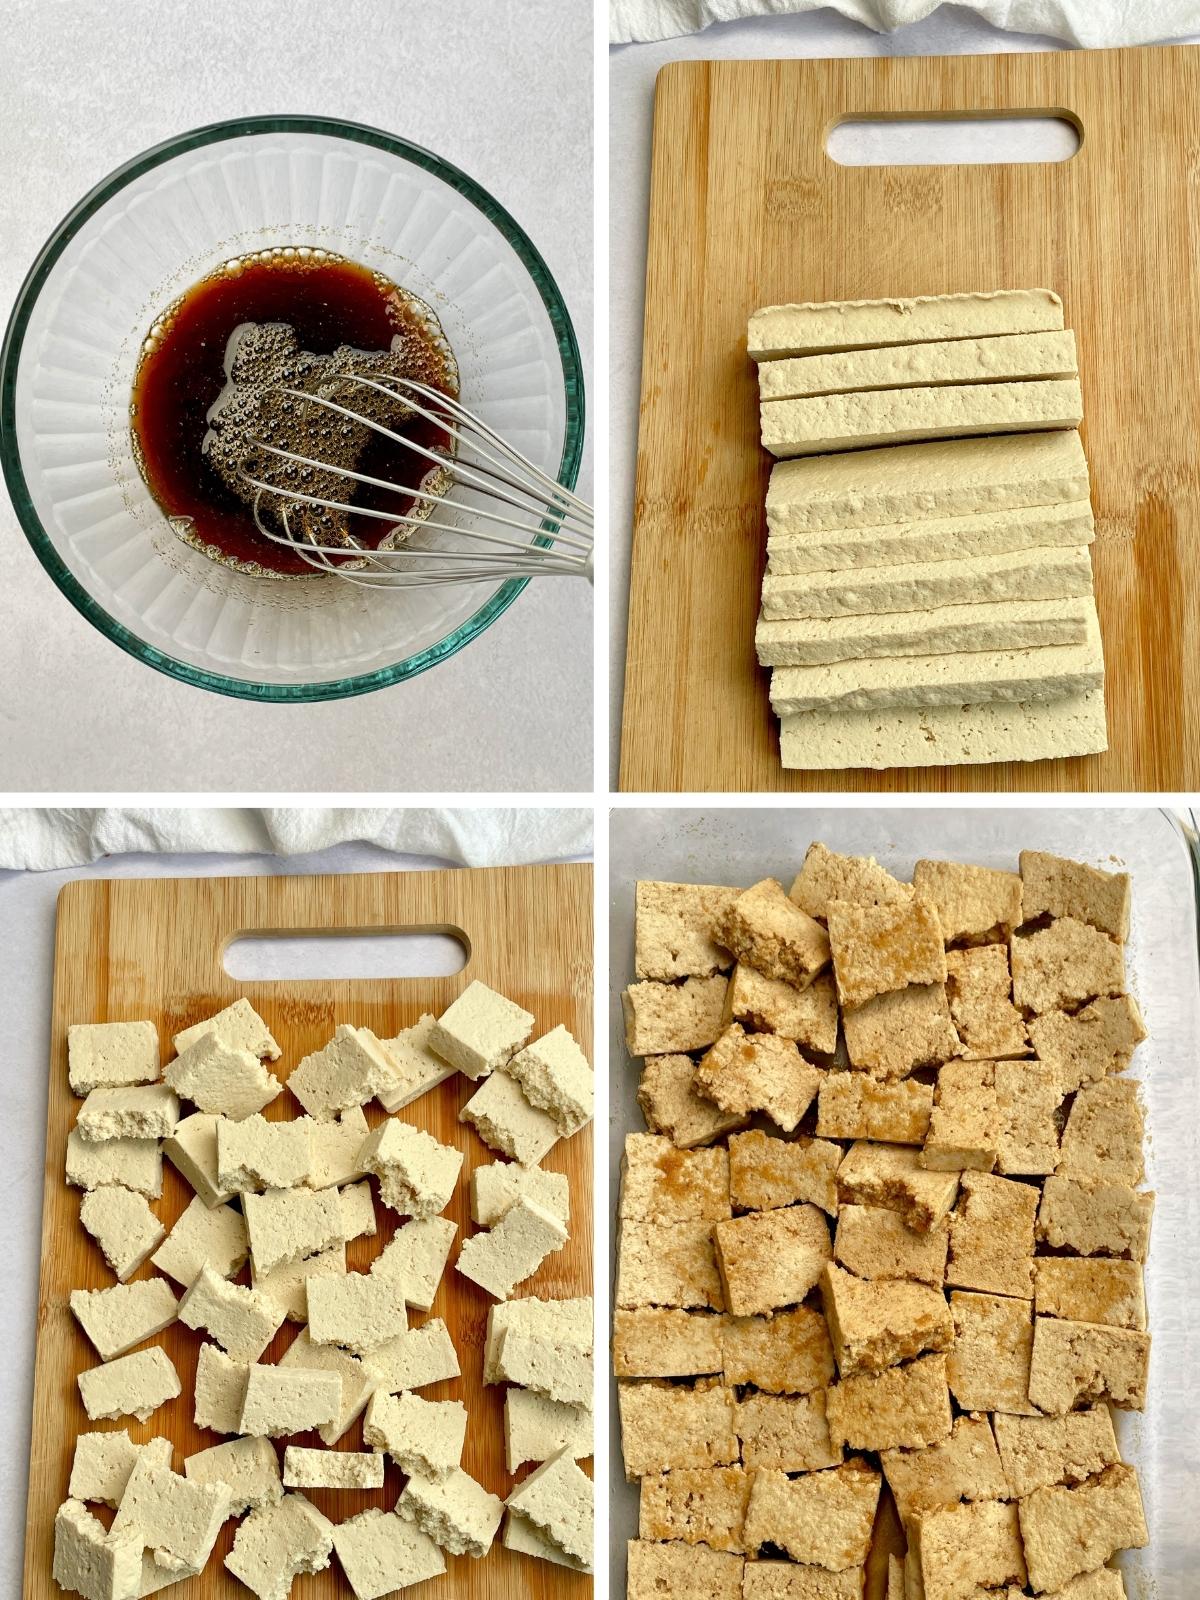 Process steps for marinated tofu.